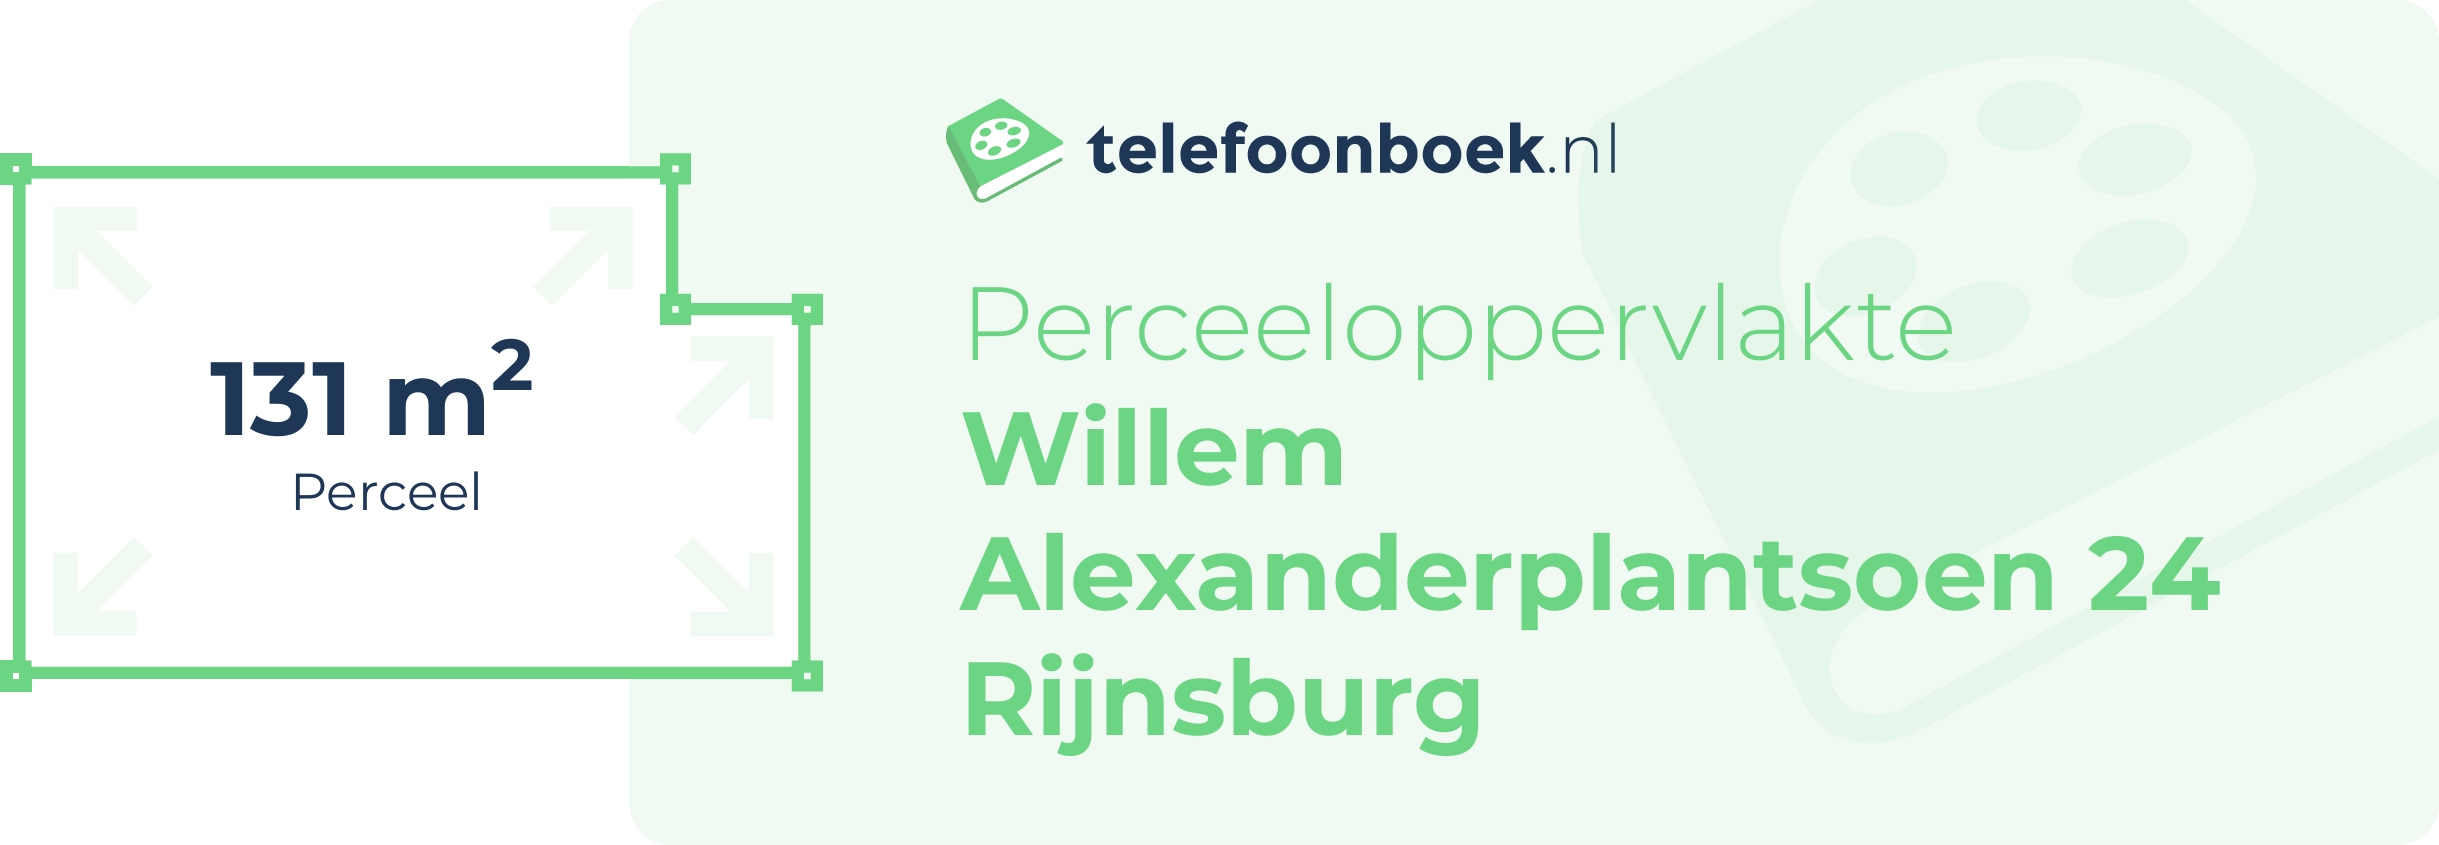 Perceeloppervlakte Willem Alexanderplantsoen 24 Rijnsburg